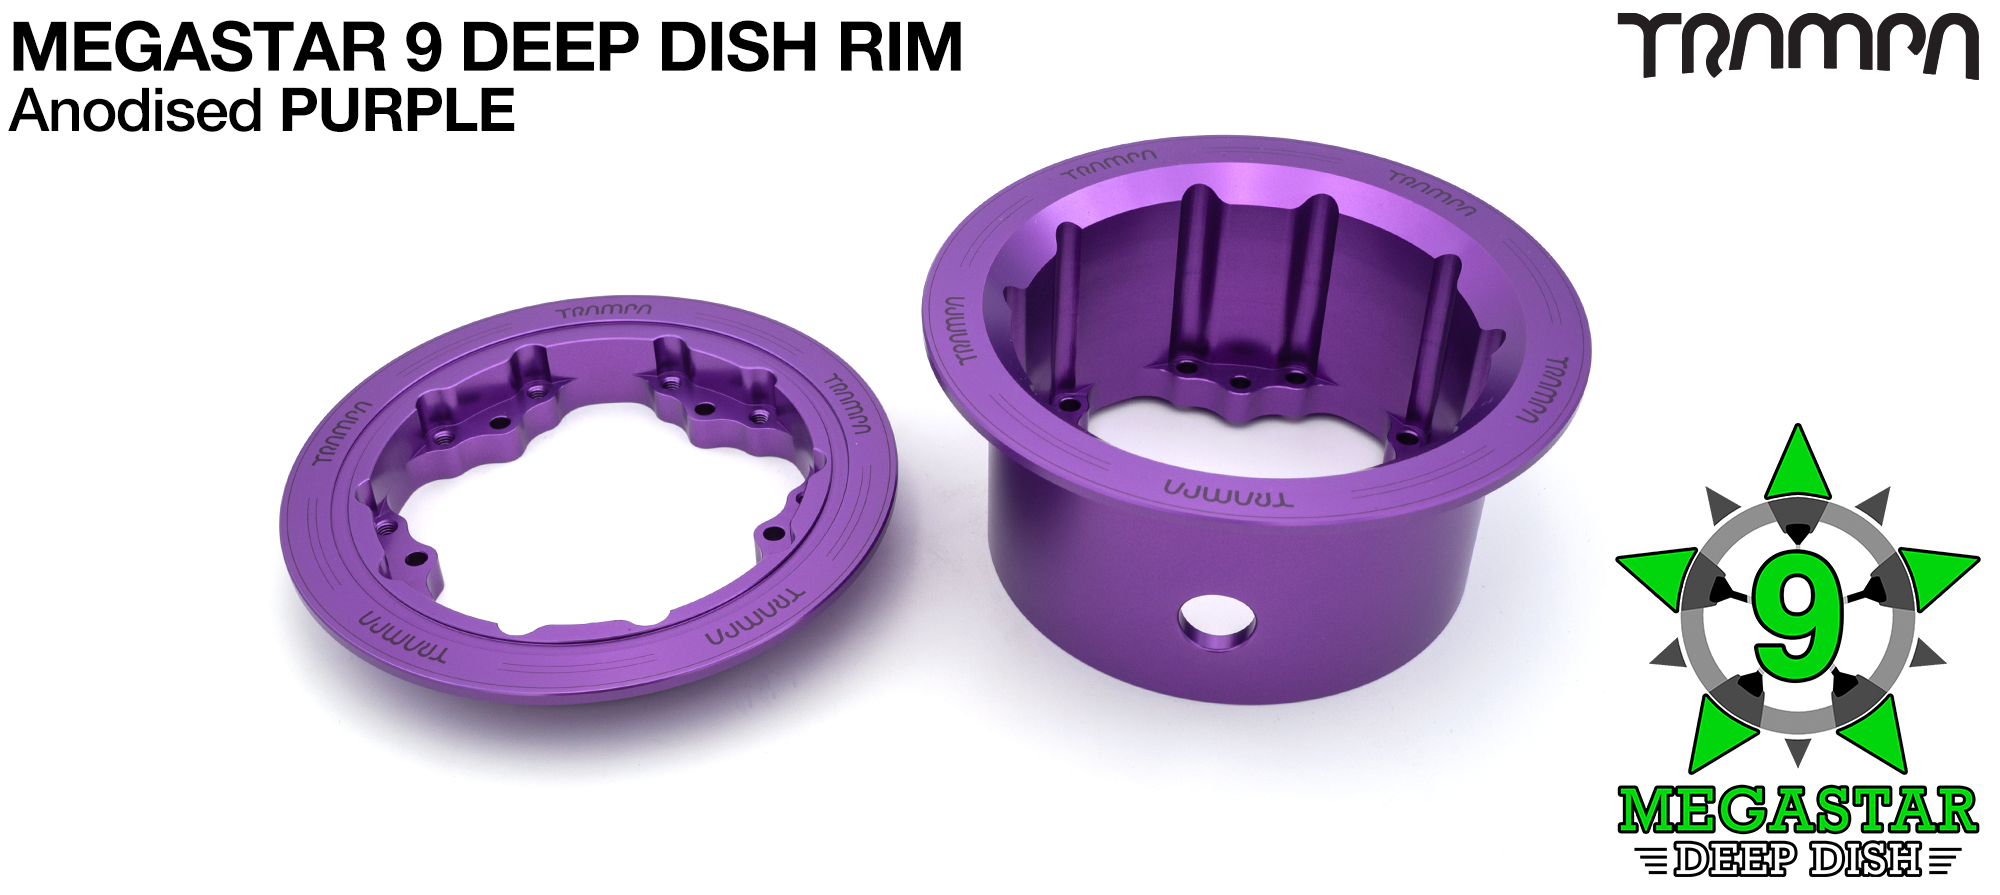 DEEP-DISH MEGASTAR 9 Rims on the REAR - PURPLE